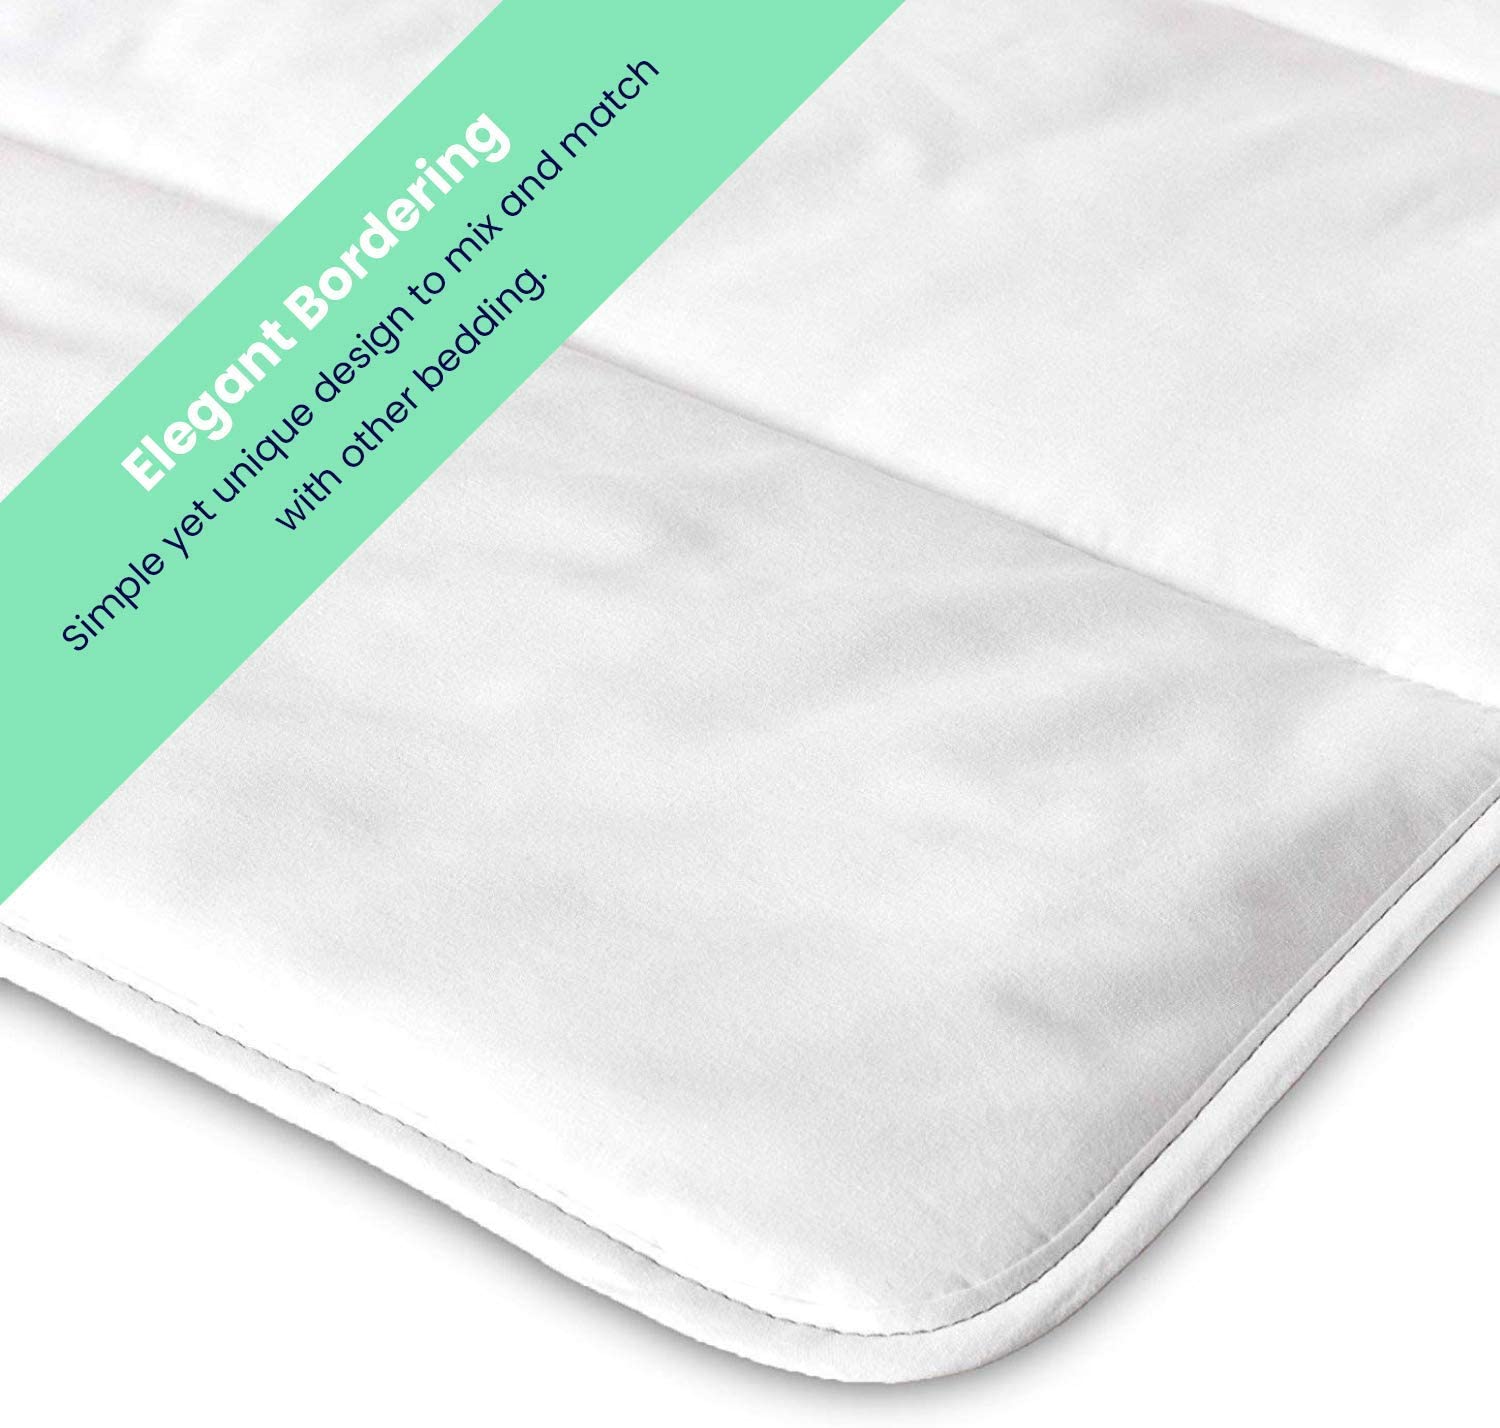 Celeep Thin Duvet Insert (86"x 86") - White, All Season Down Alternative Comforter Insert, Soft, Plush Microfiber Fill, Machine Washable, Queen Size - image 3 of 7